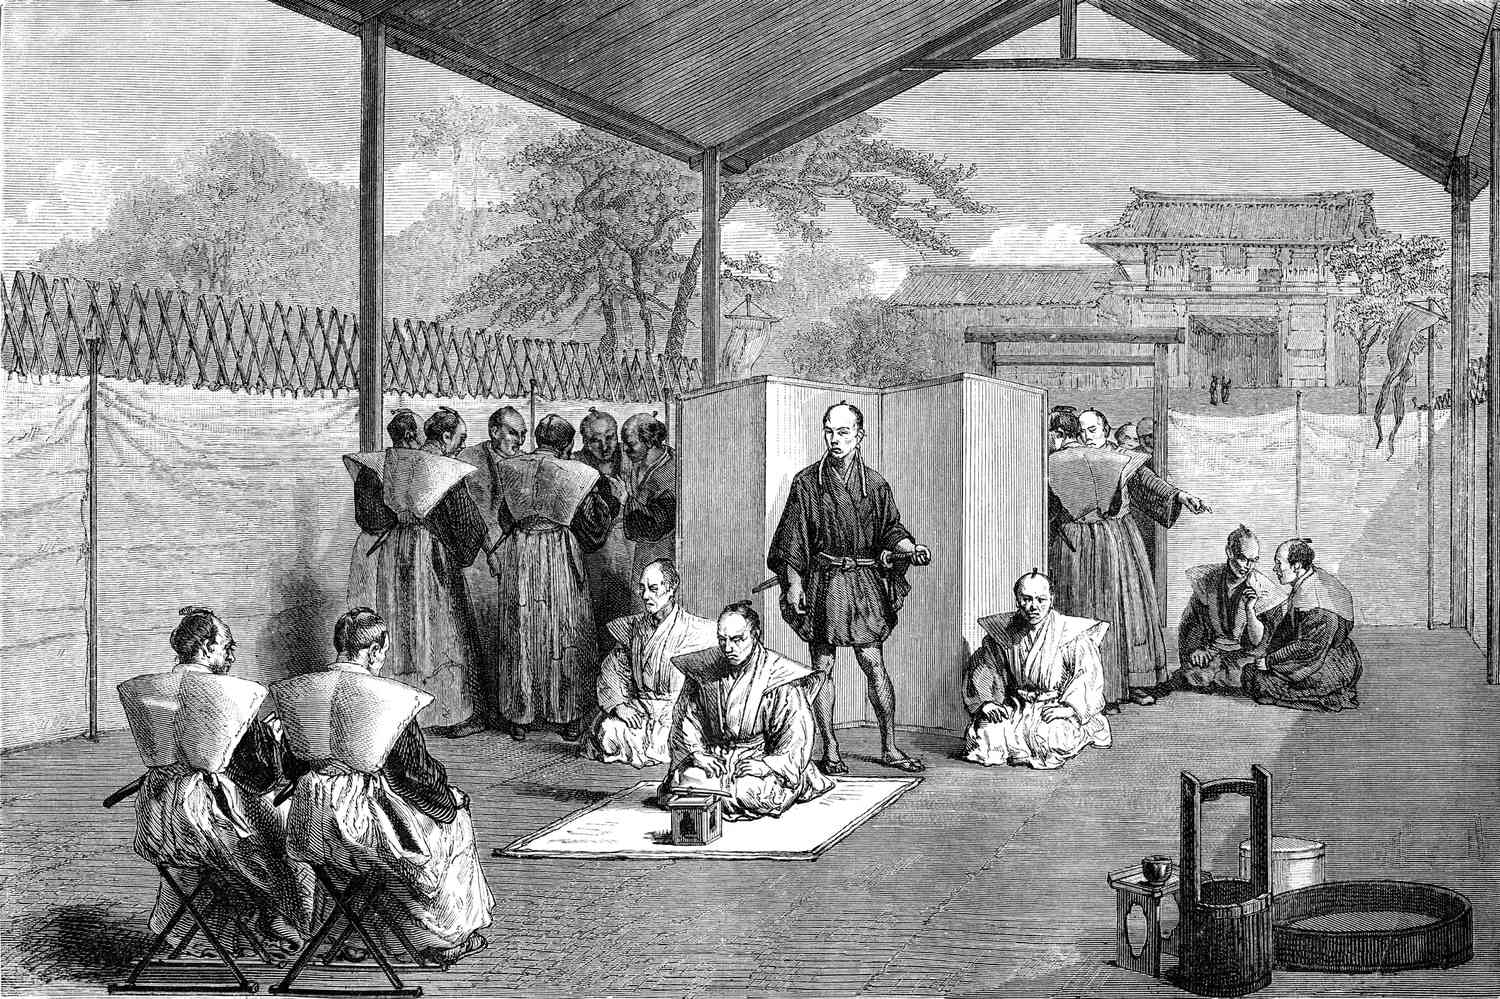 Illustration of samurai preparing for public ritual seppuku